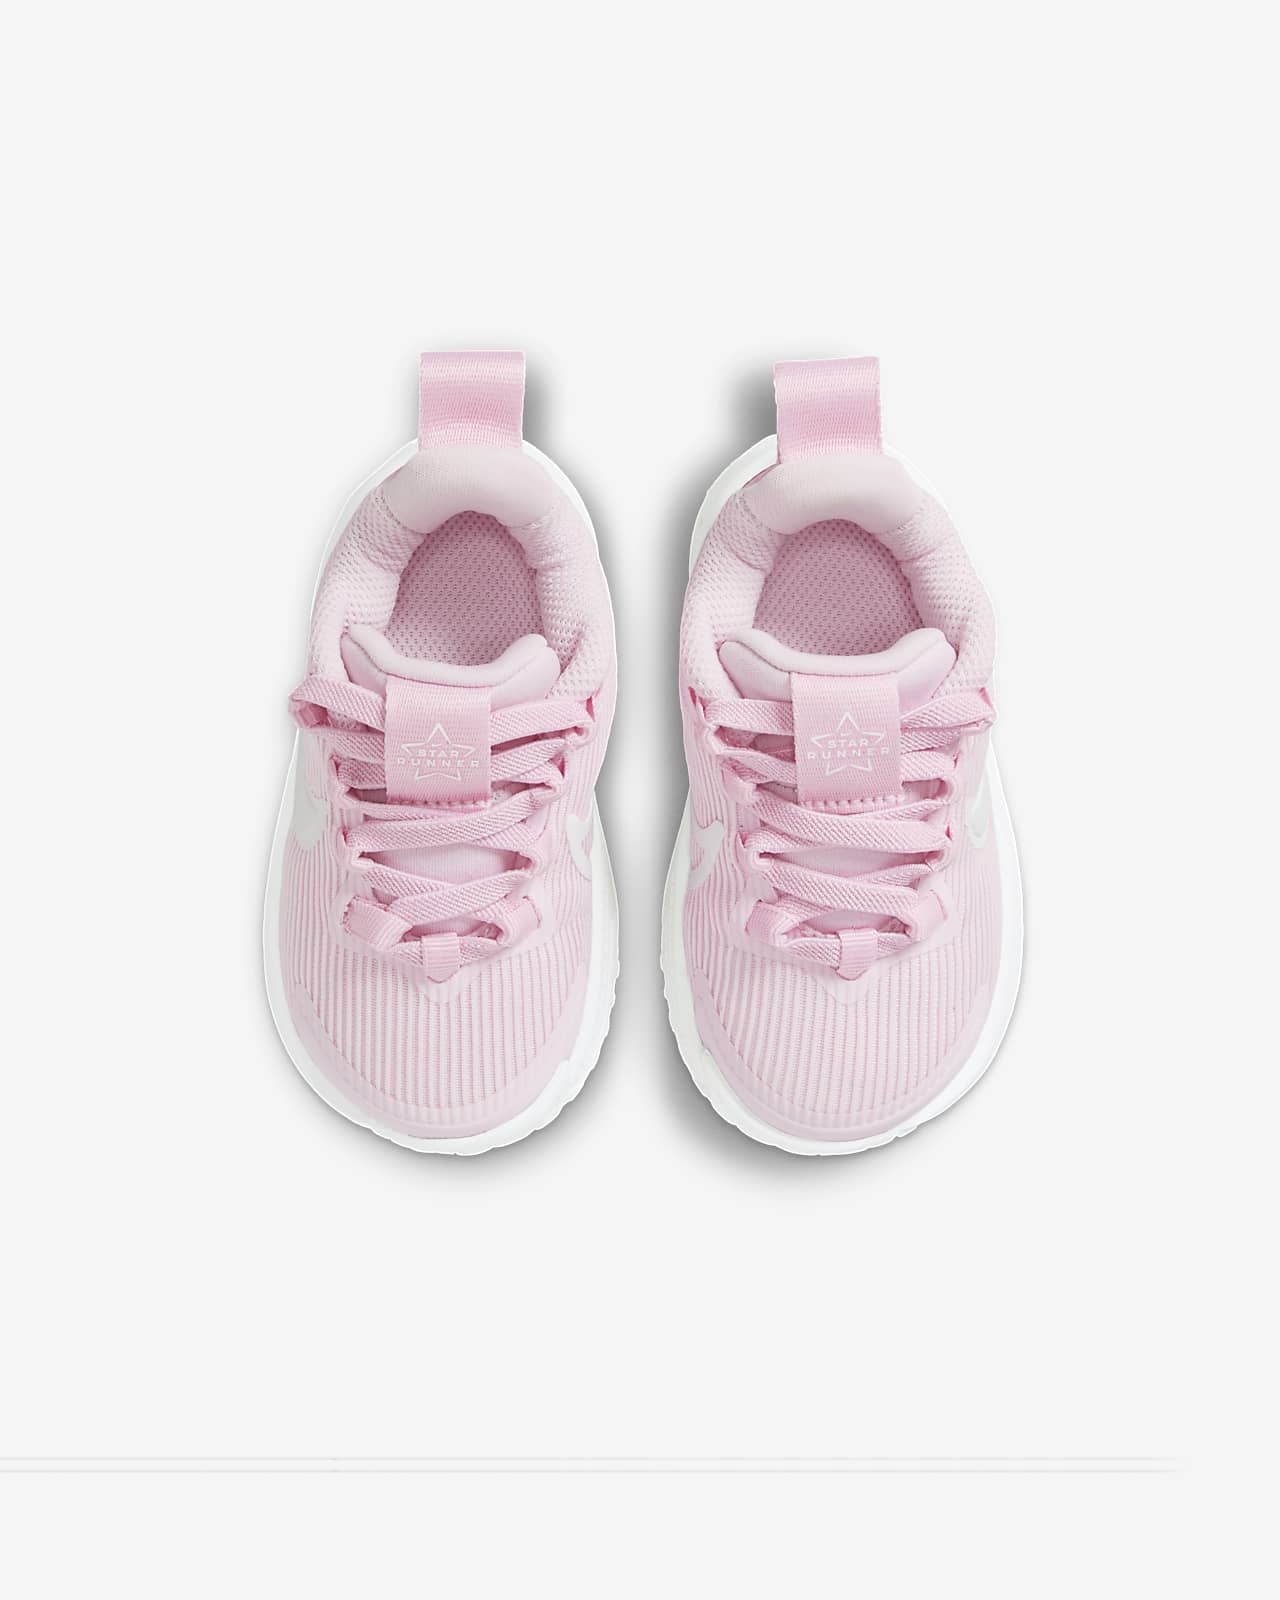 Runner Star Baby/Toddler Nike Shoes. 4